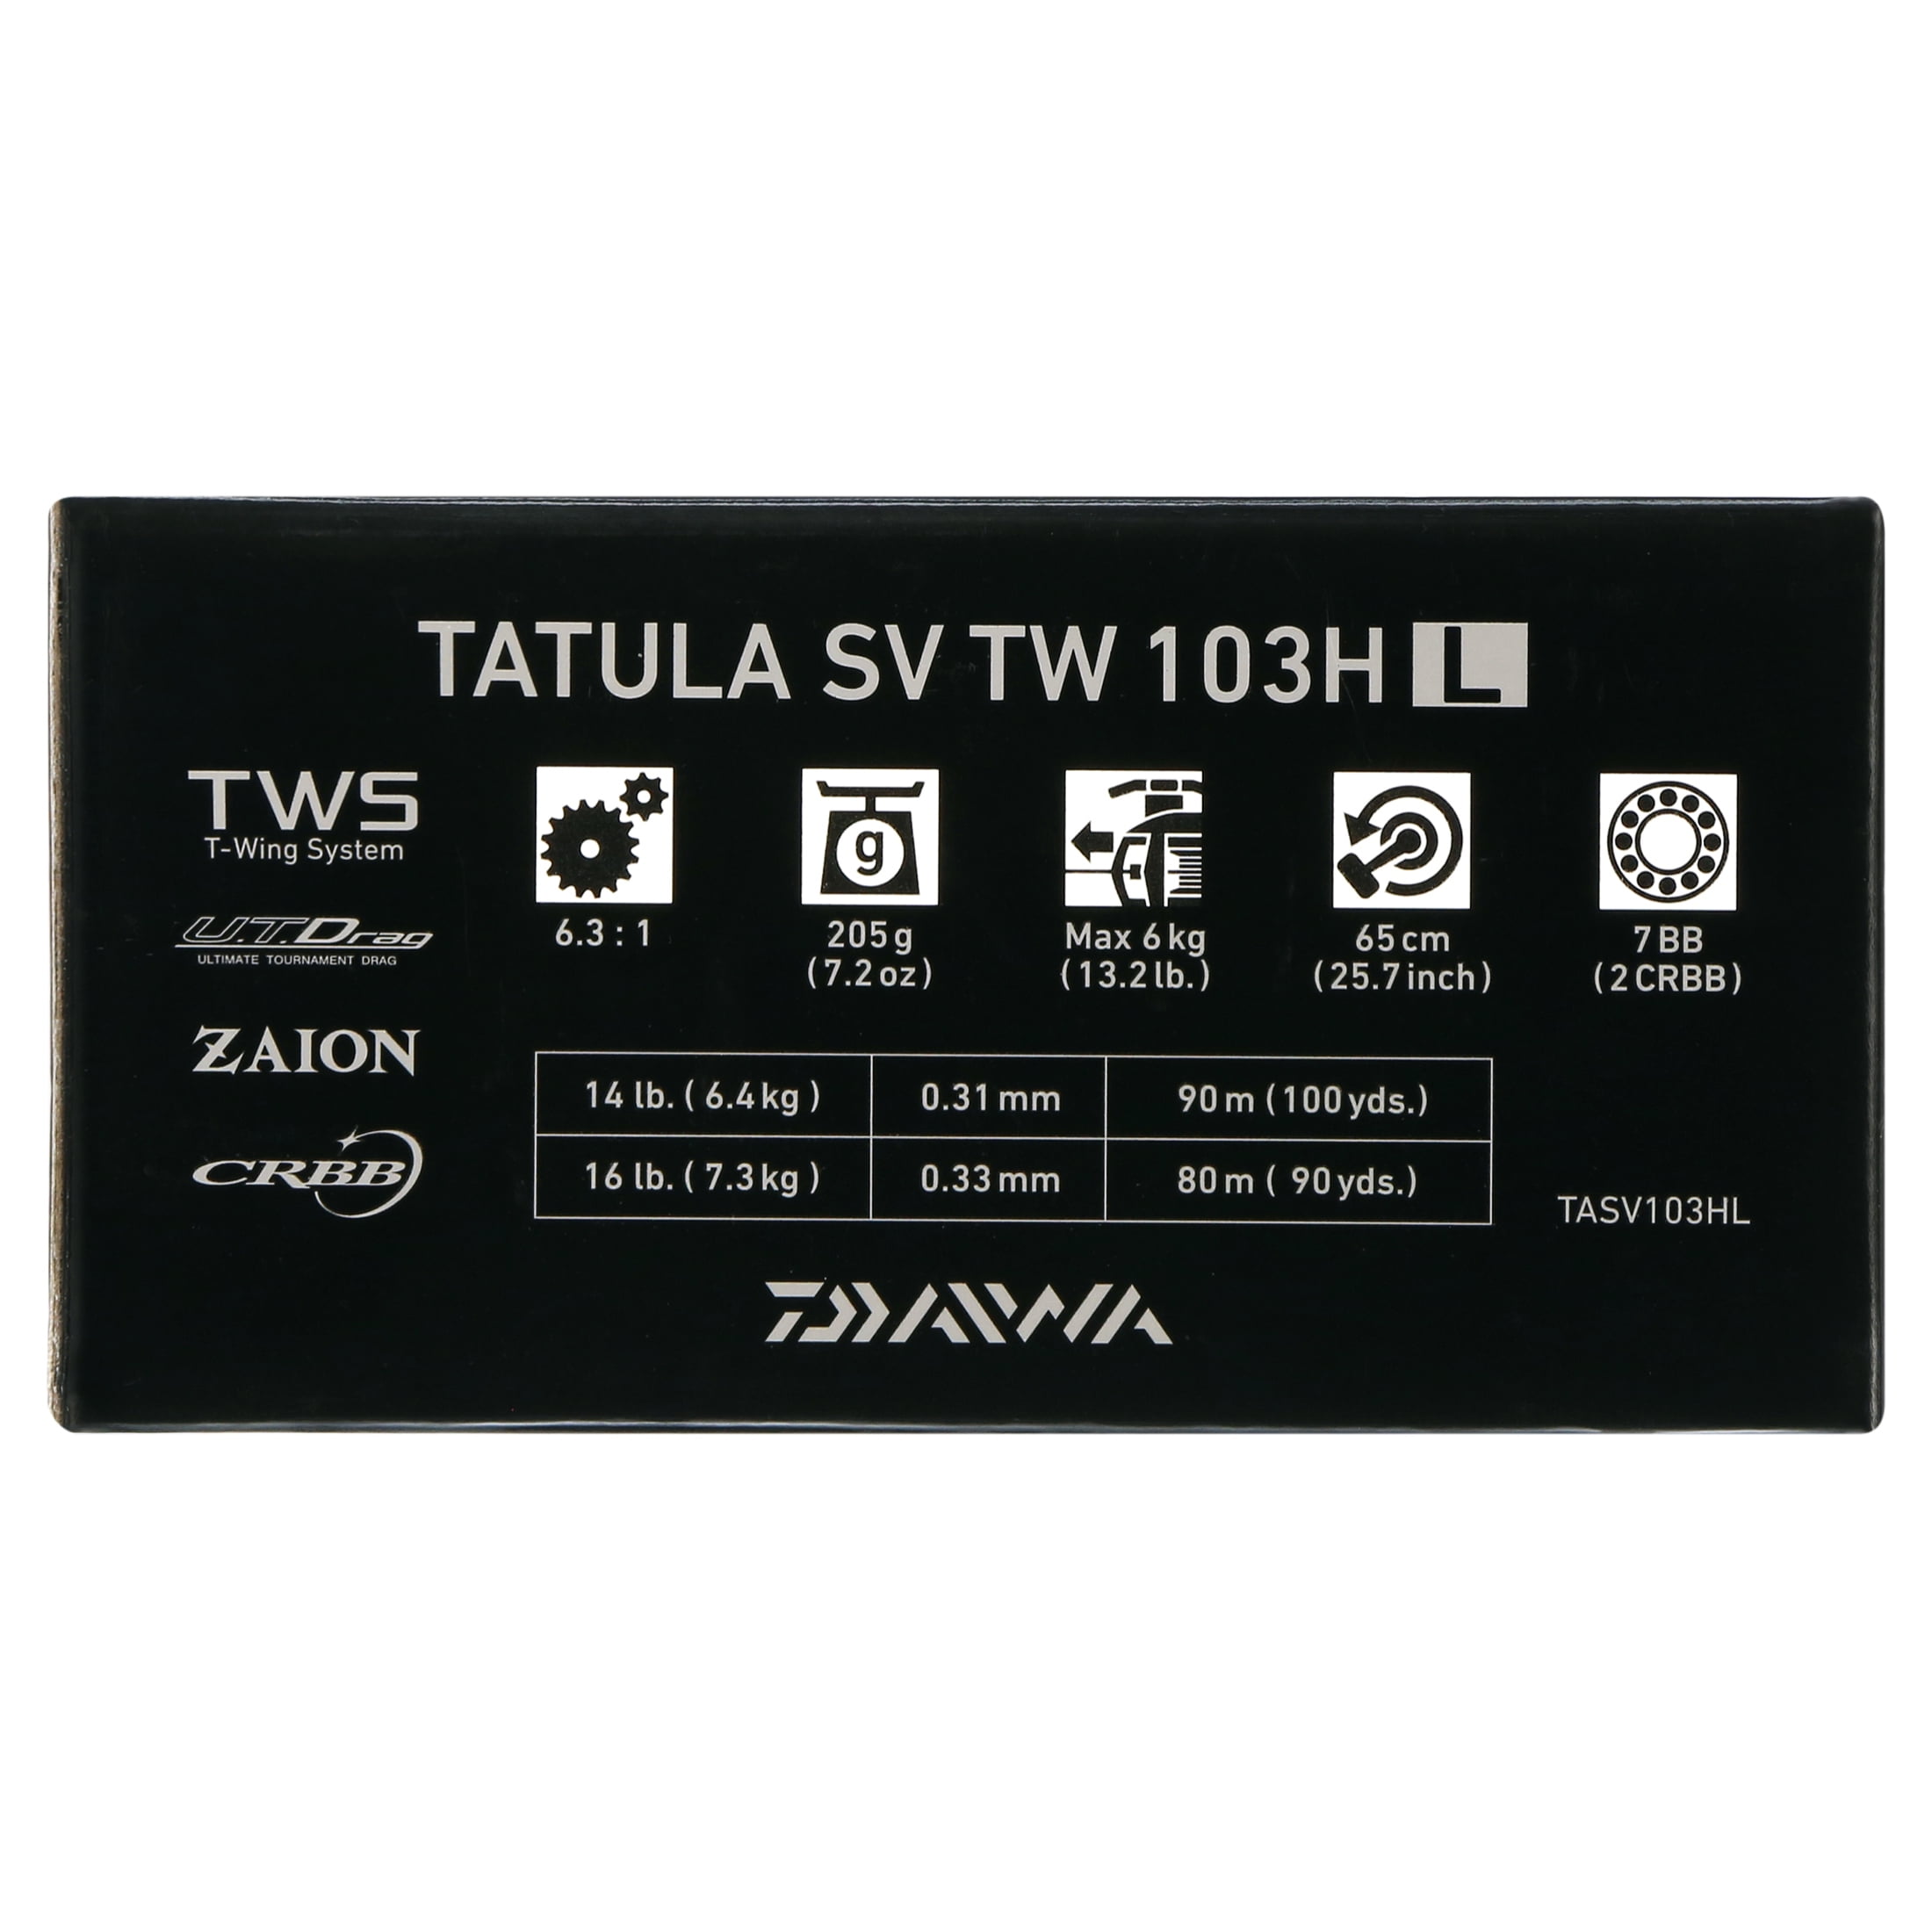 Daiwa Tatula SV tw 103HSL 7.3:1 Baitcast Left Hand Fishing Reel - Tasv103hsl, Black